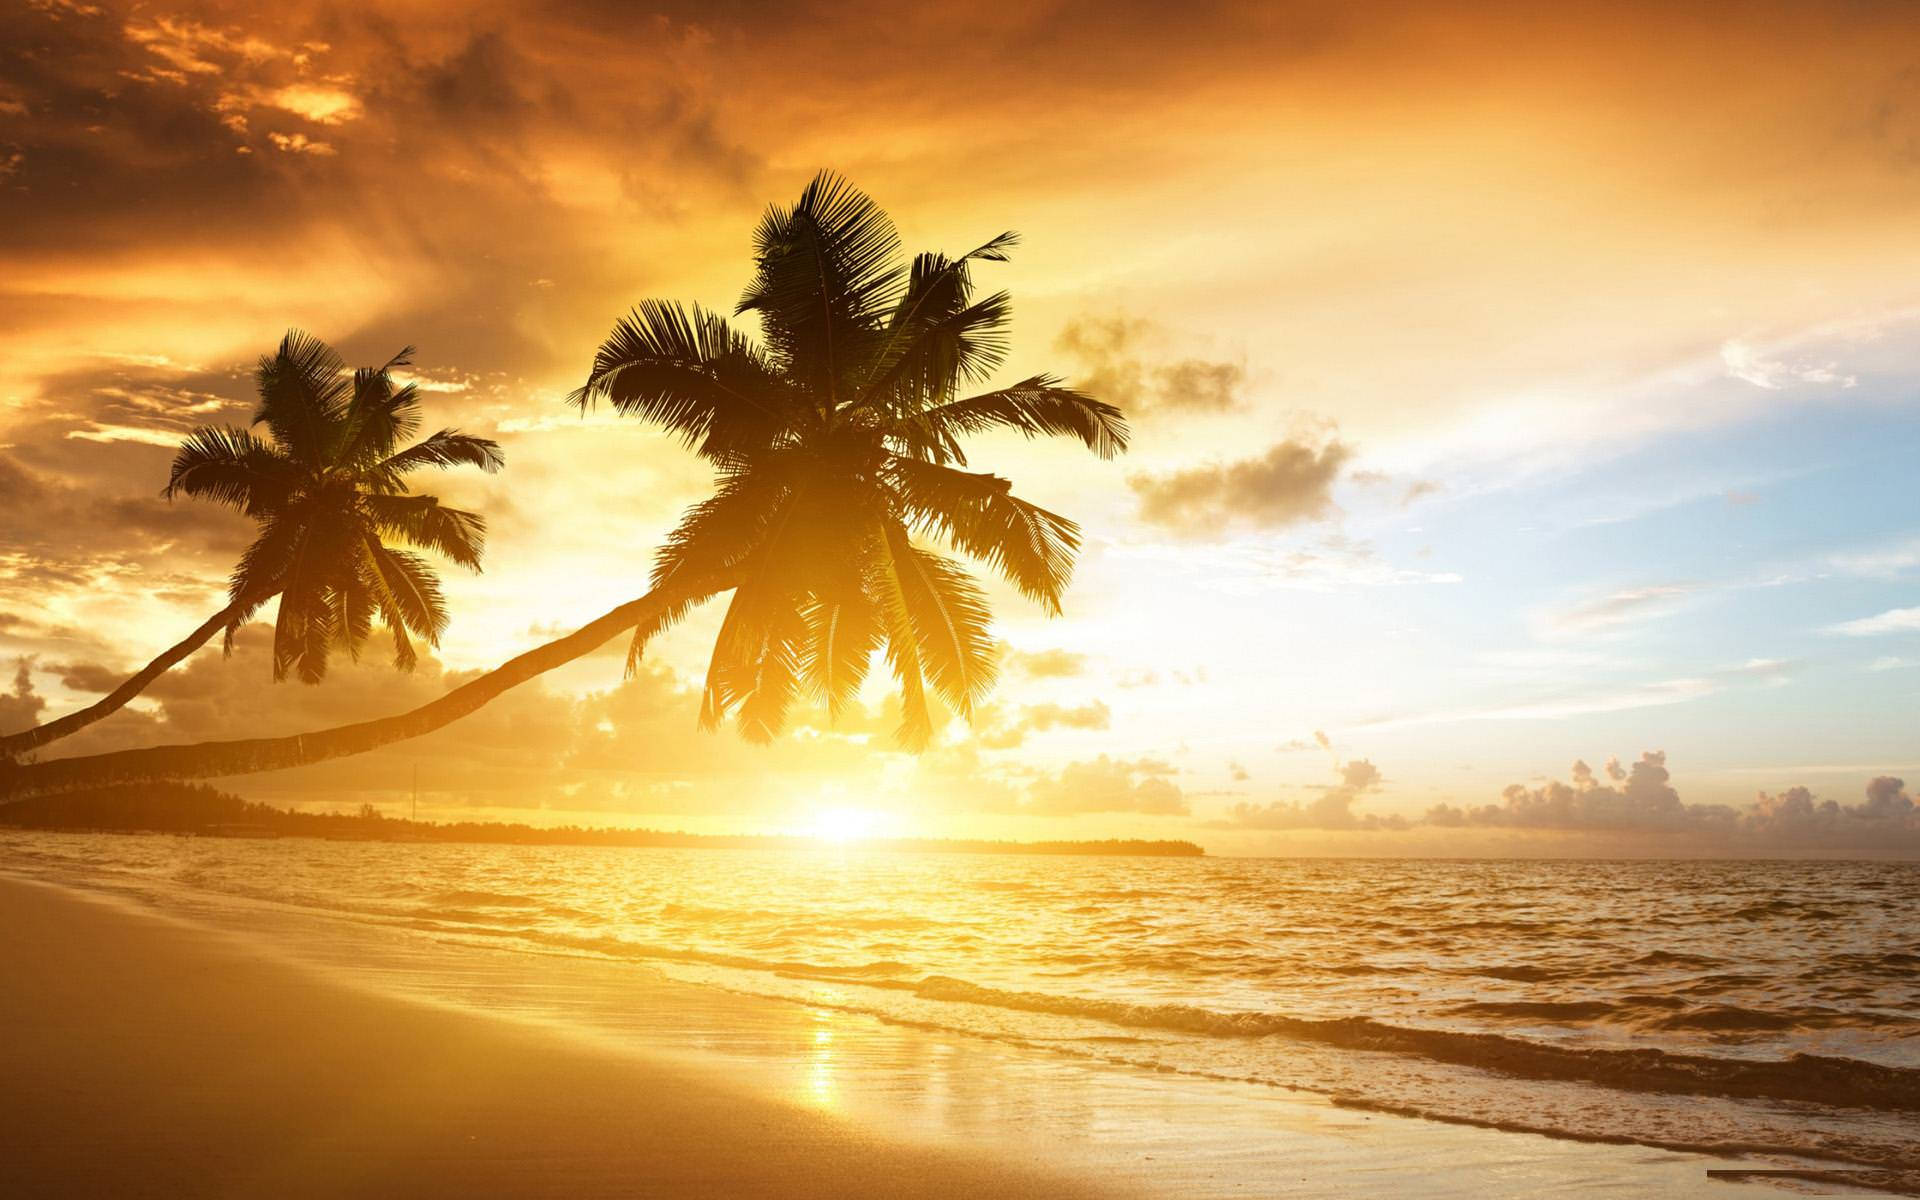 Golden sunset and palm trees at the beach desktop wallpaper. 